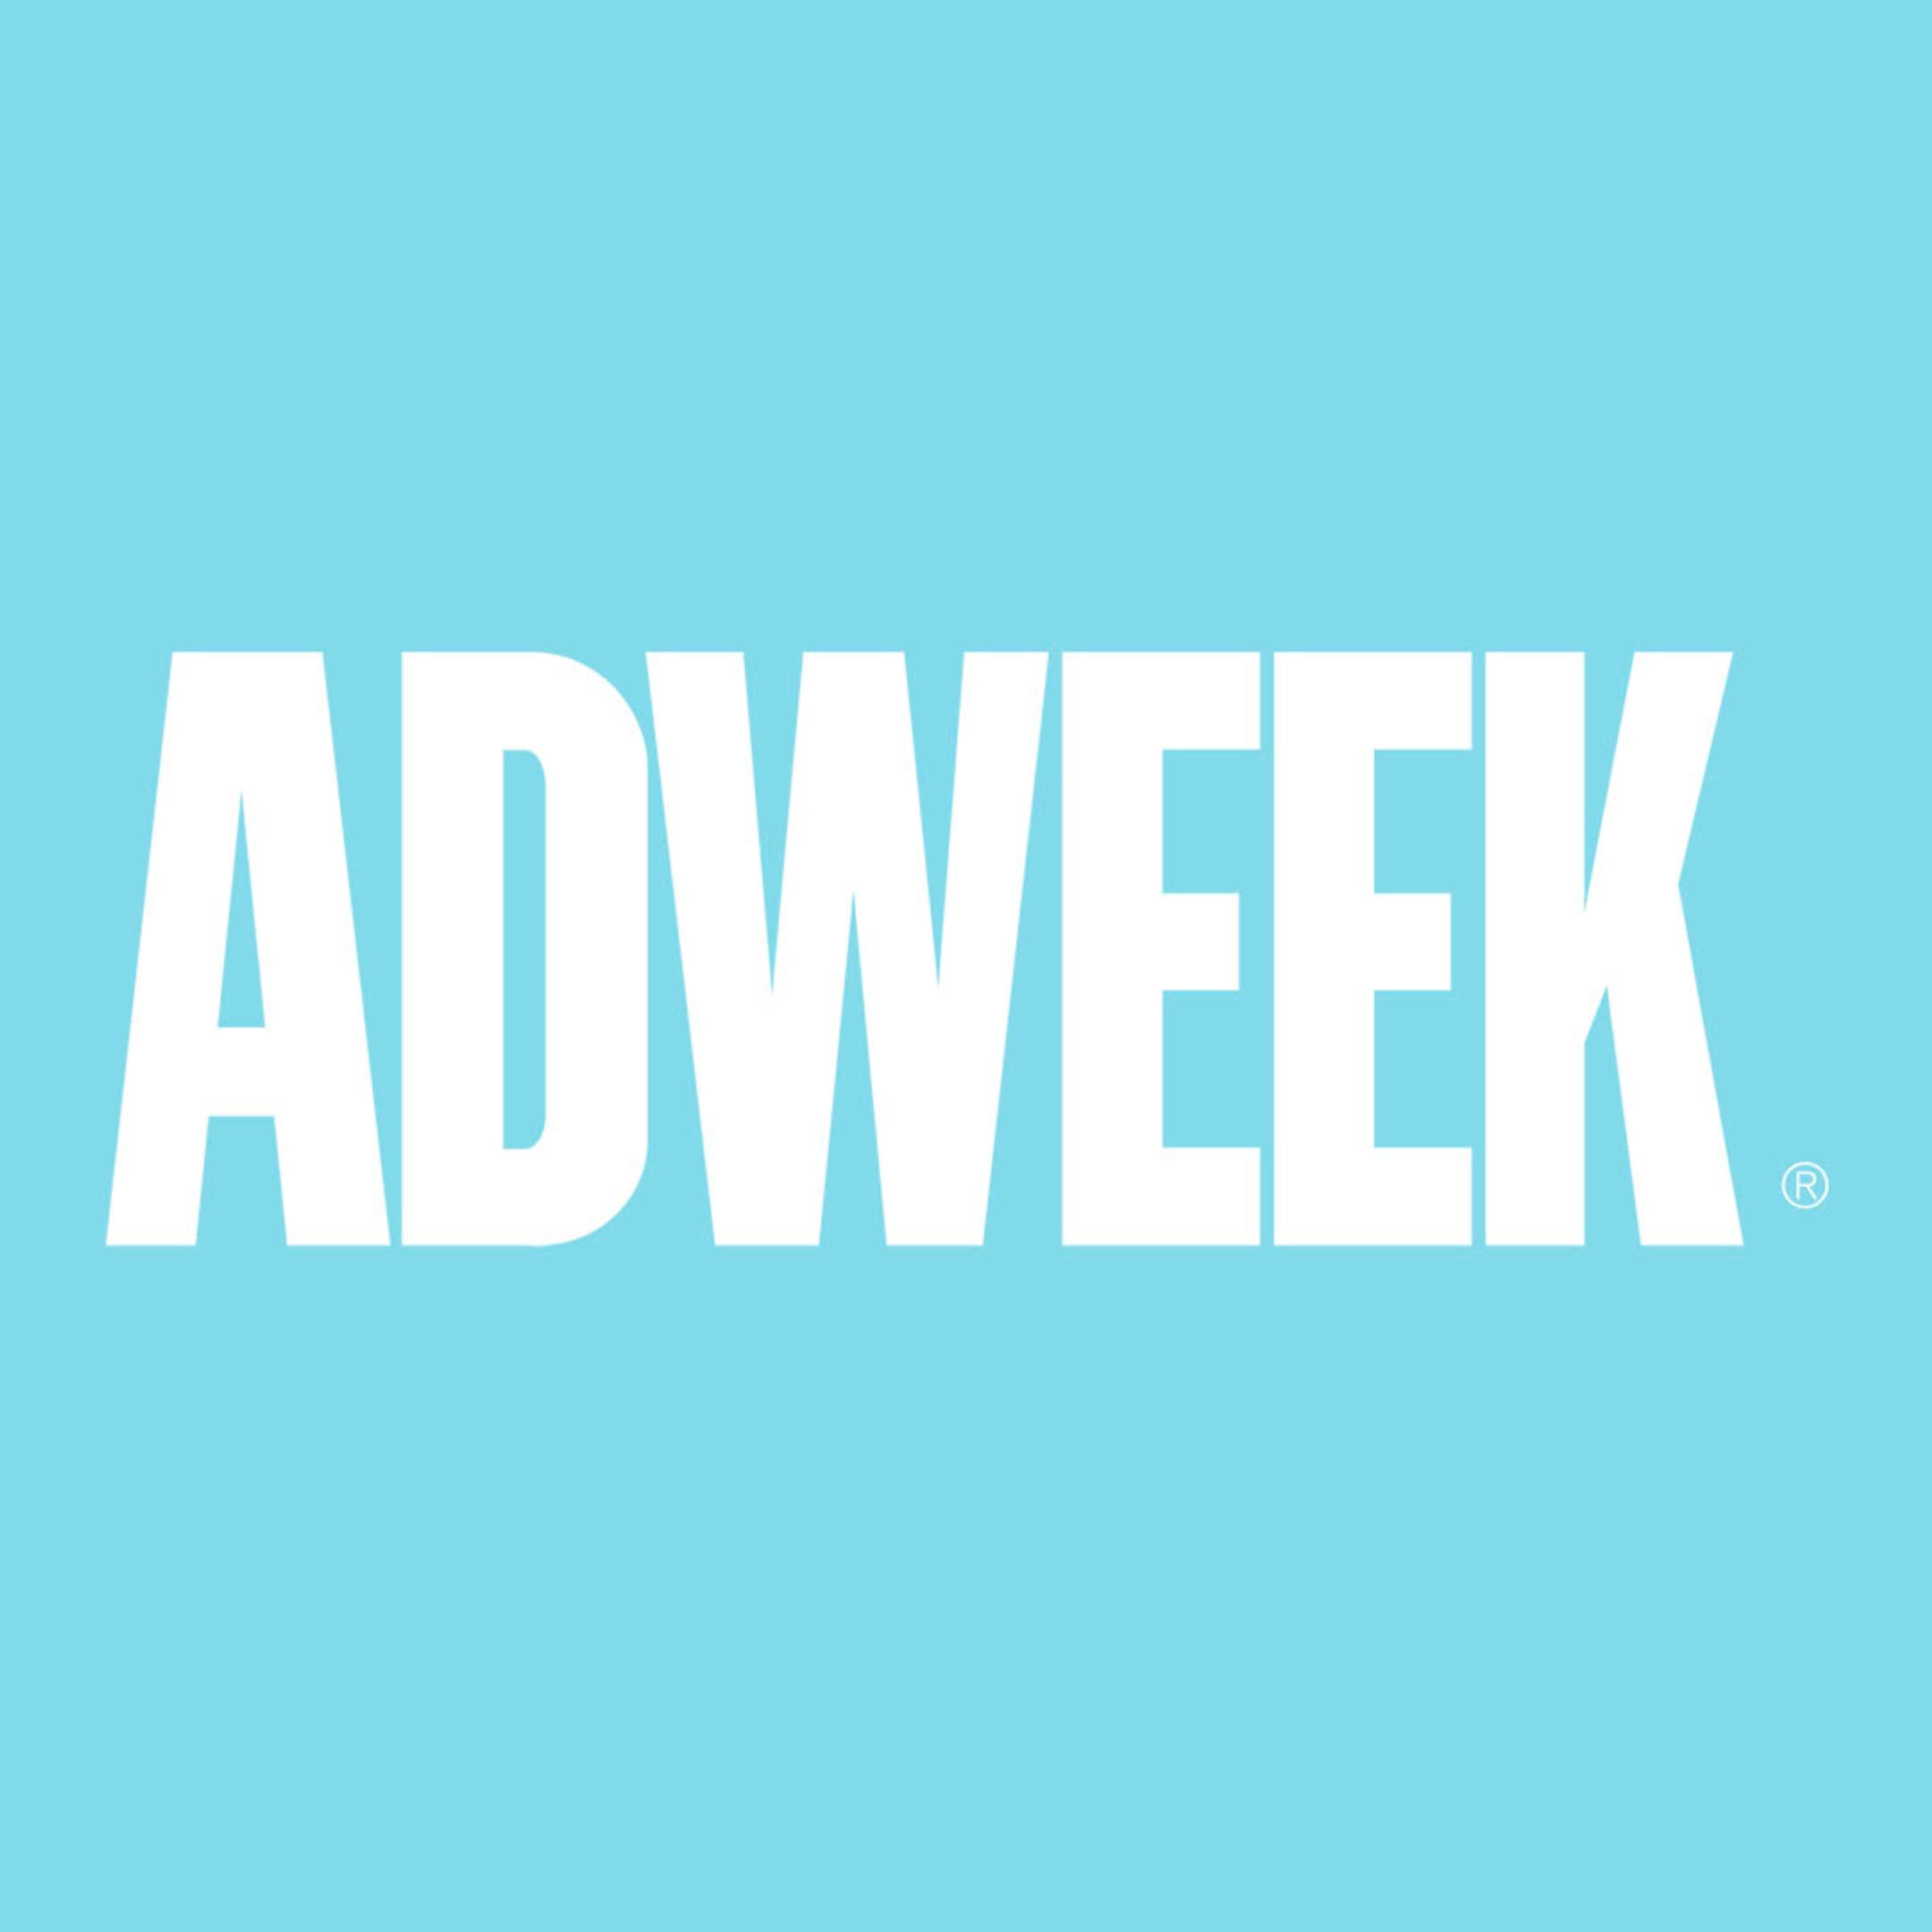 AdWeek logo on blue background